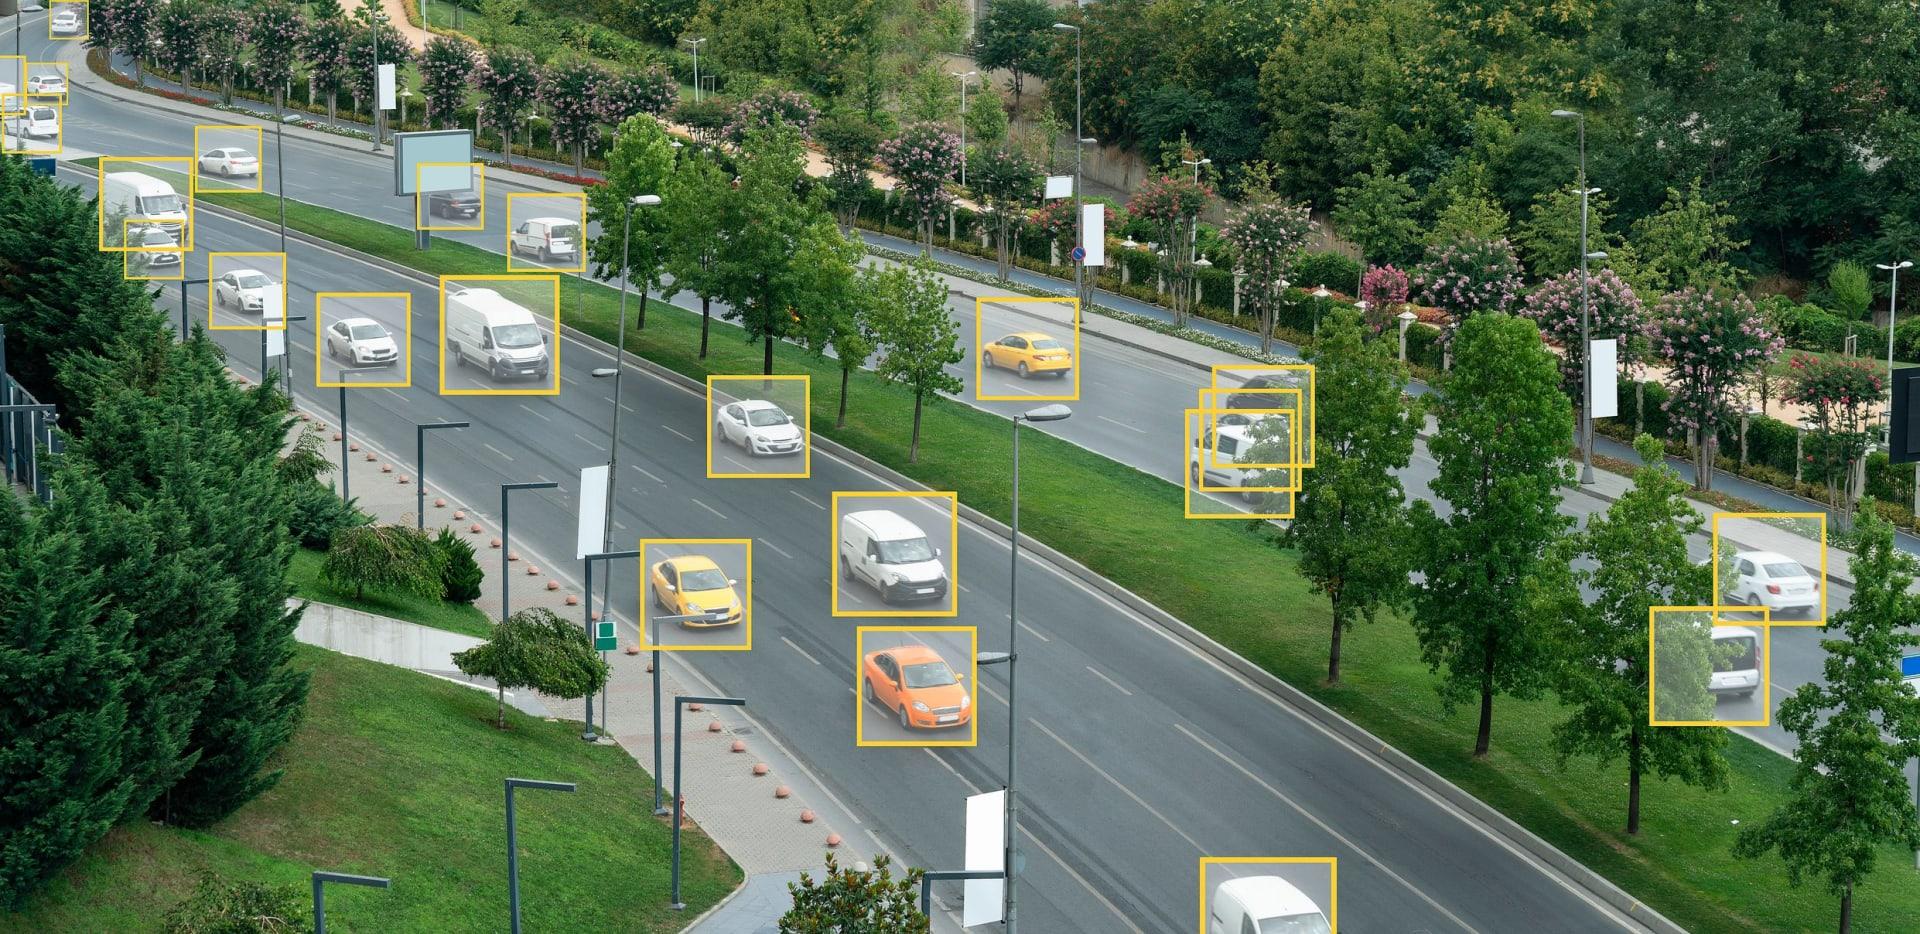 Israel police begin testing AI-based automated traffic violation system